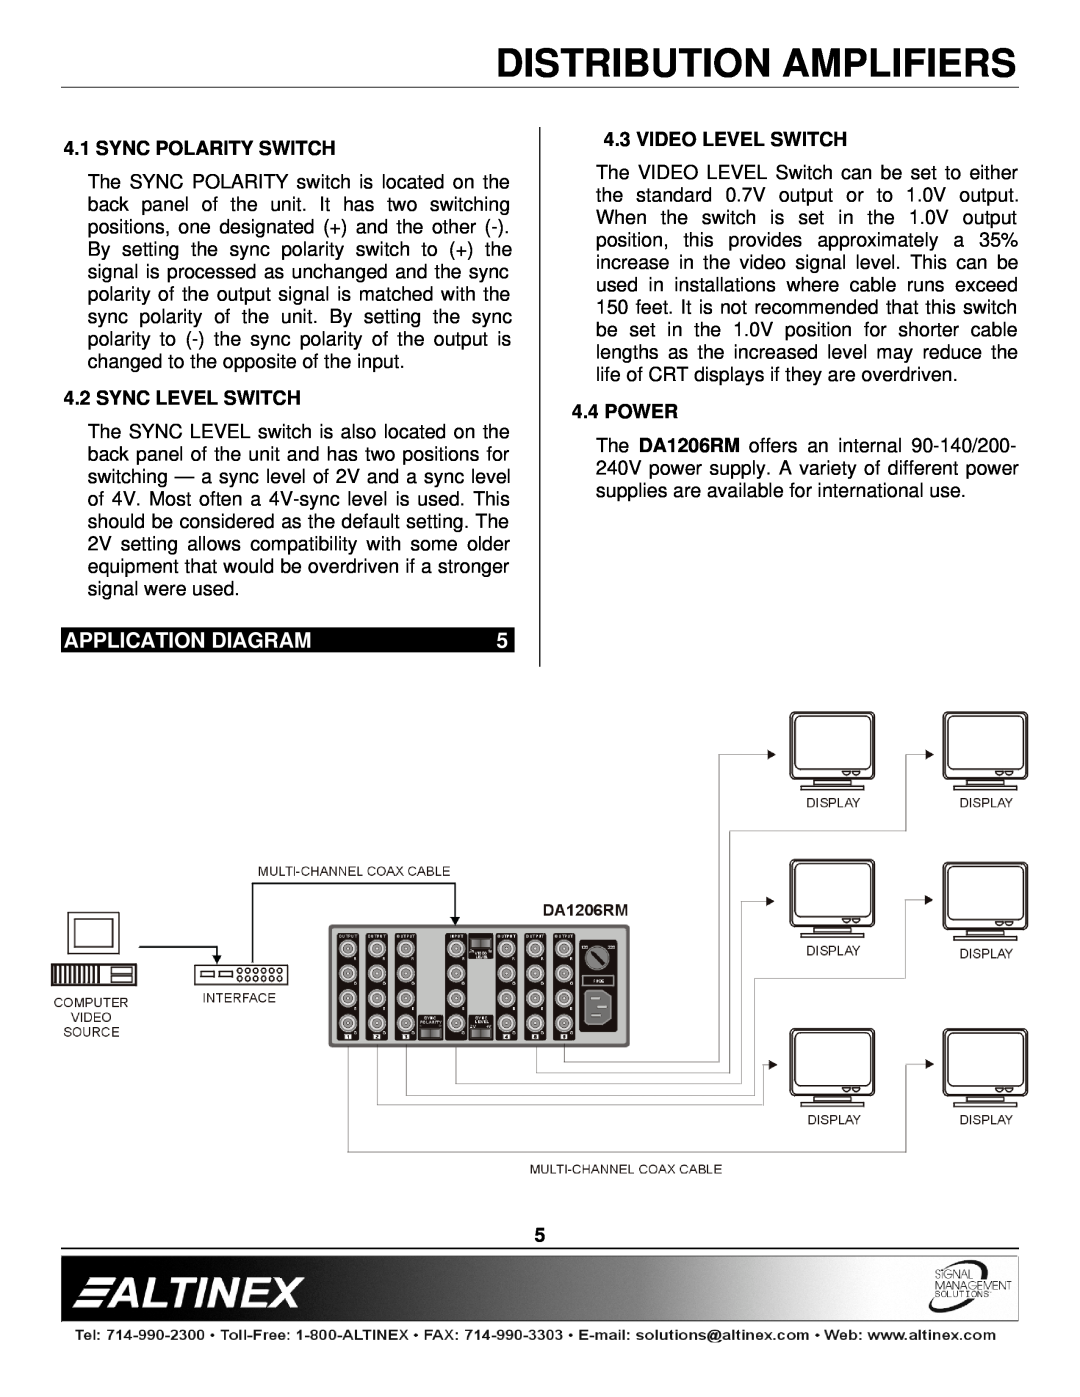 Altinex DA1206RM manual Application Diagram, Sync Polarity Switch, Sync Level Switch, Video Level Switch, Power 